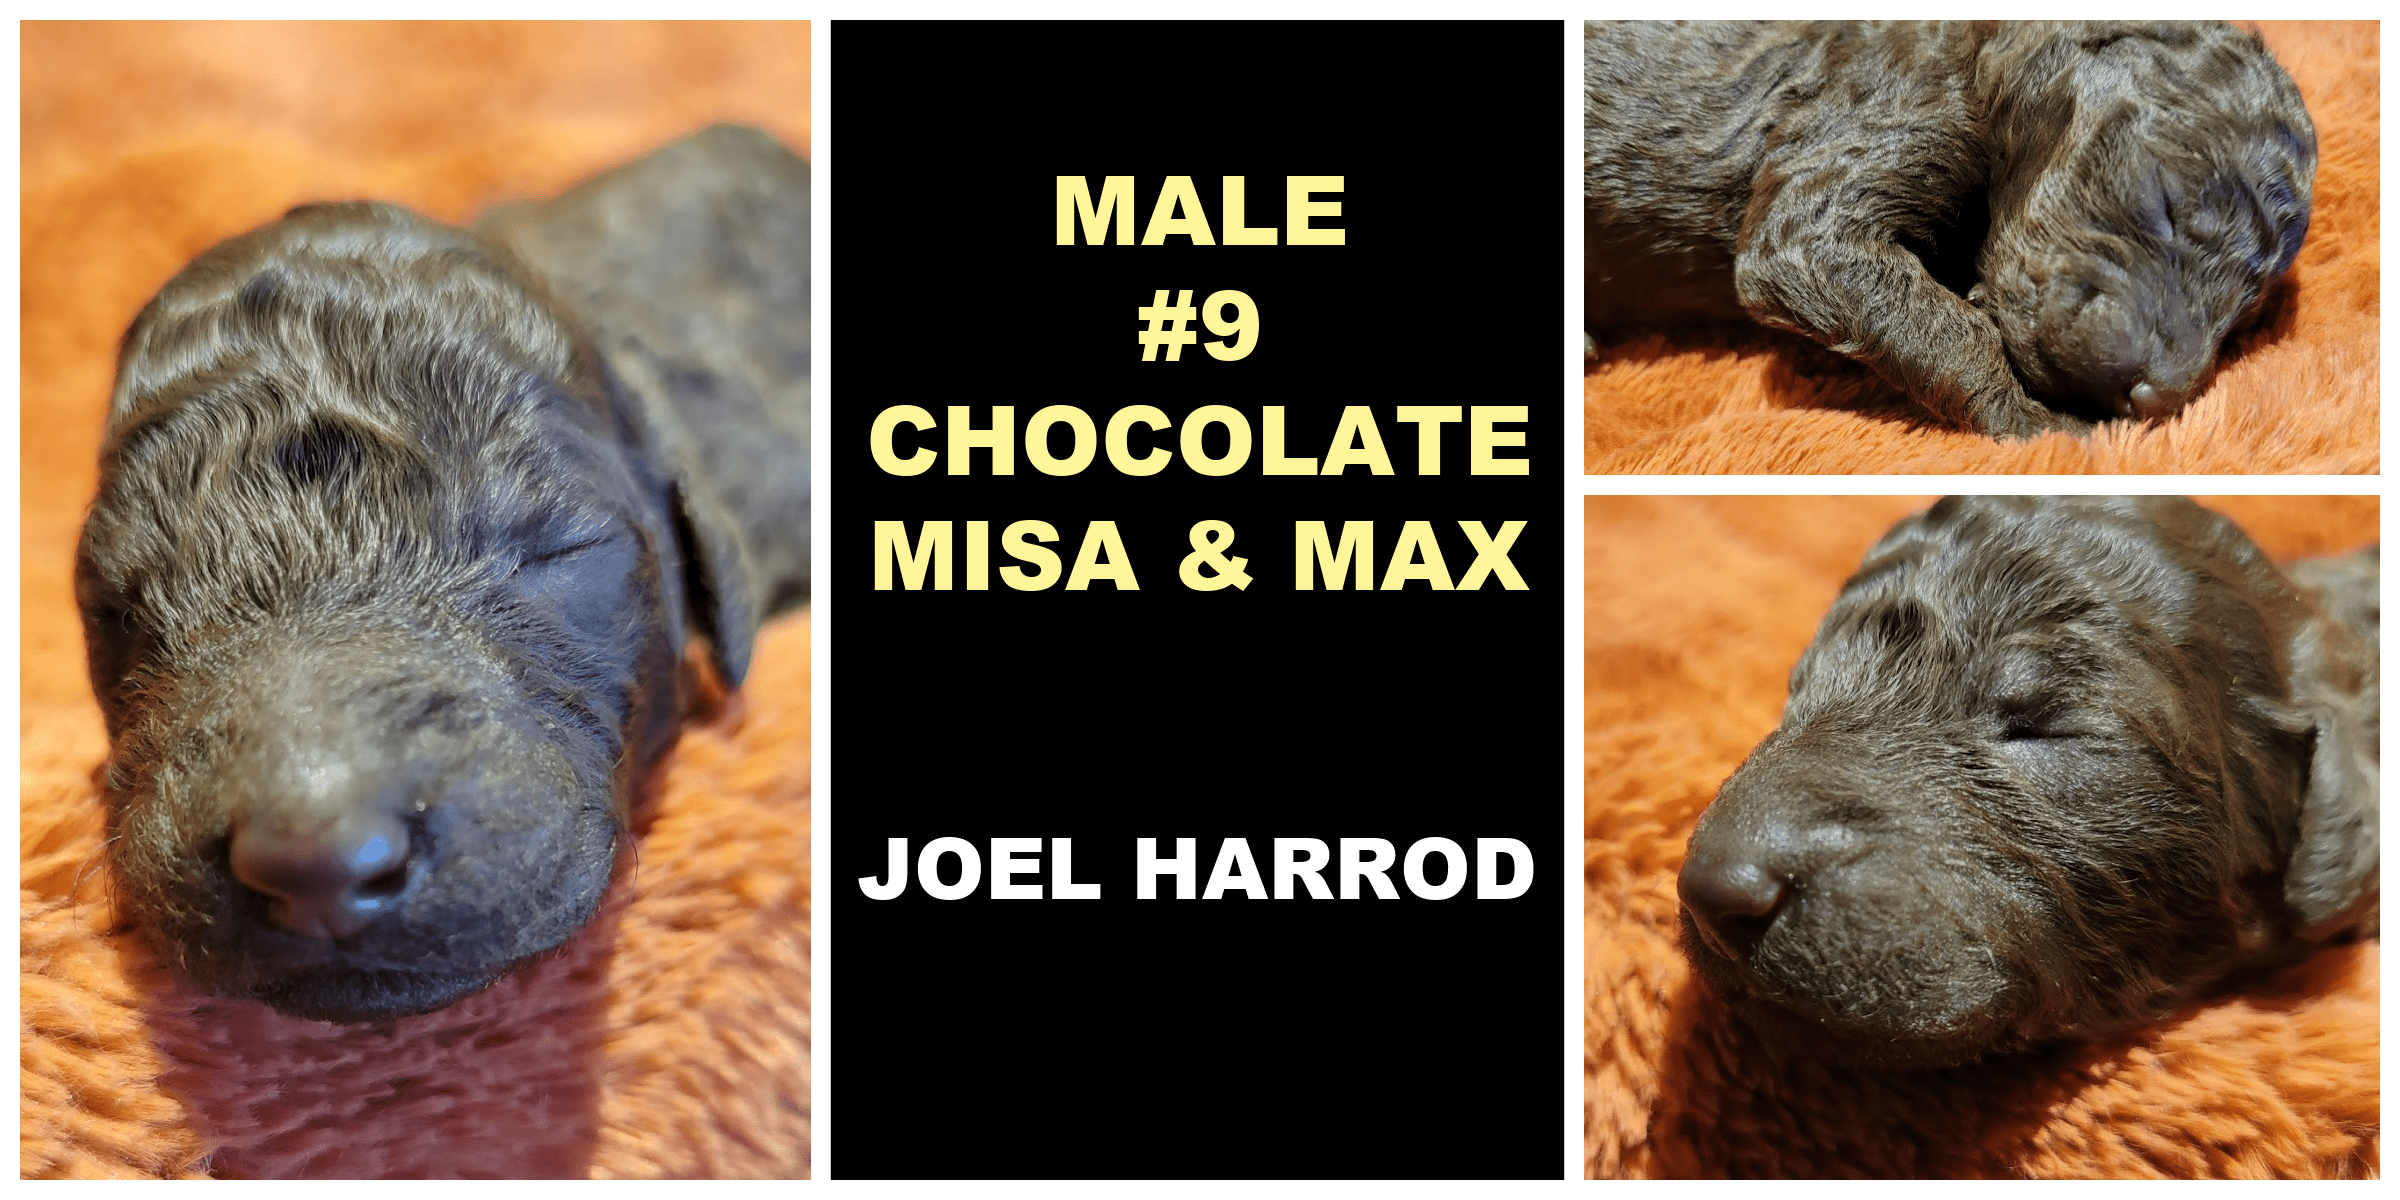 MALE 9 CHOCOLATE MISA MAX